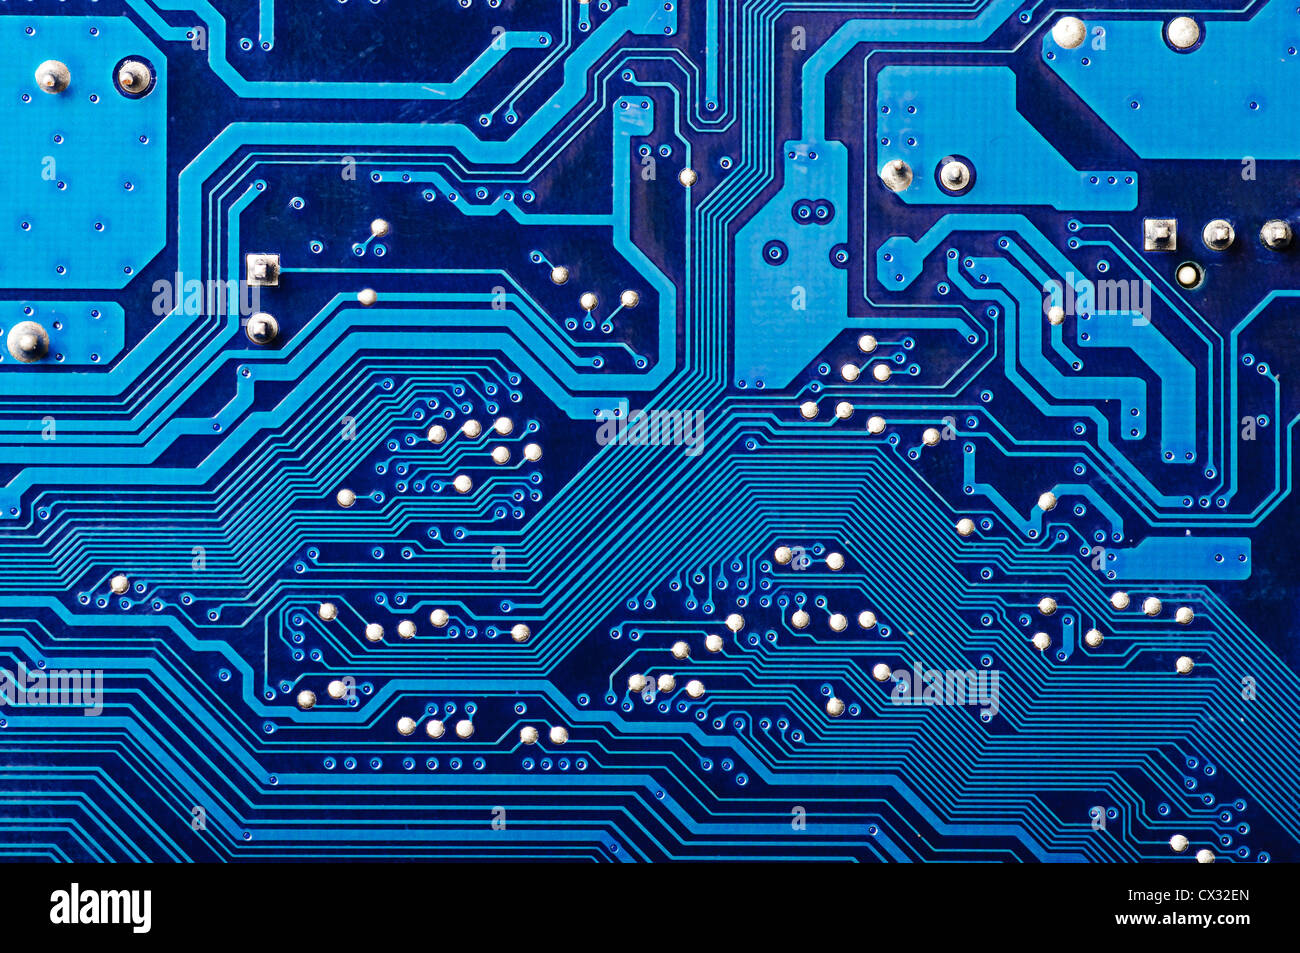 Blaue digitale Platine Hintergrund (pc-Motherboard Stockfotografie - Alamy